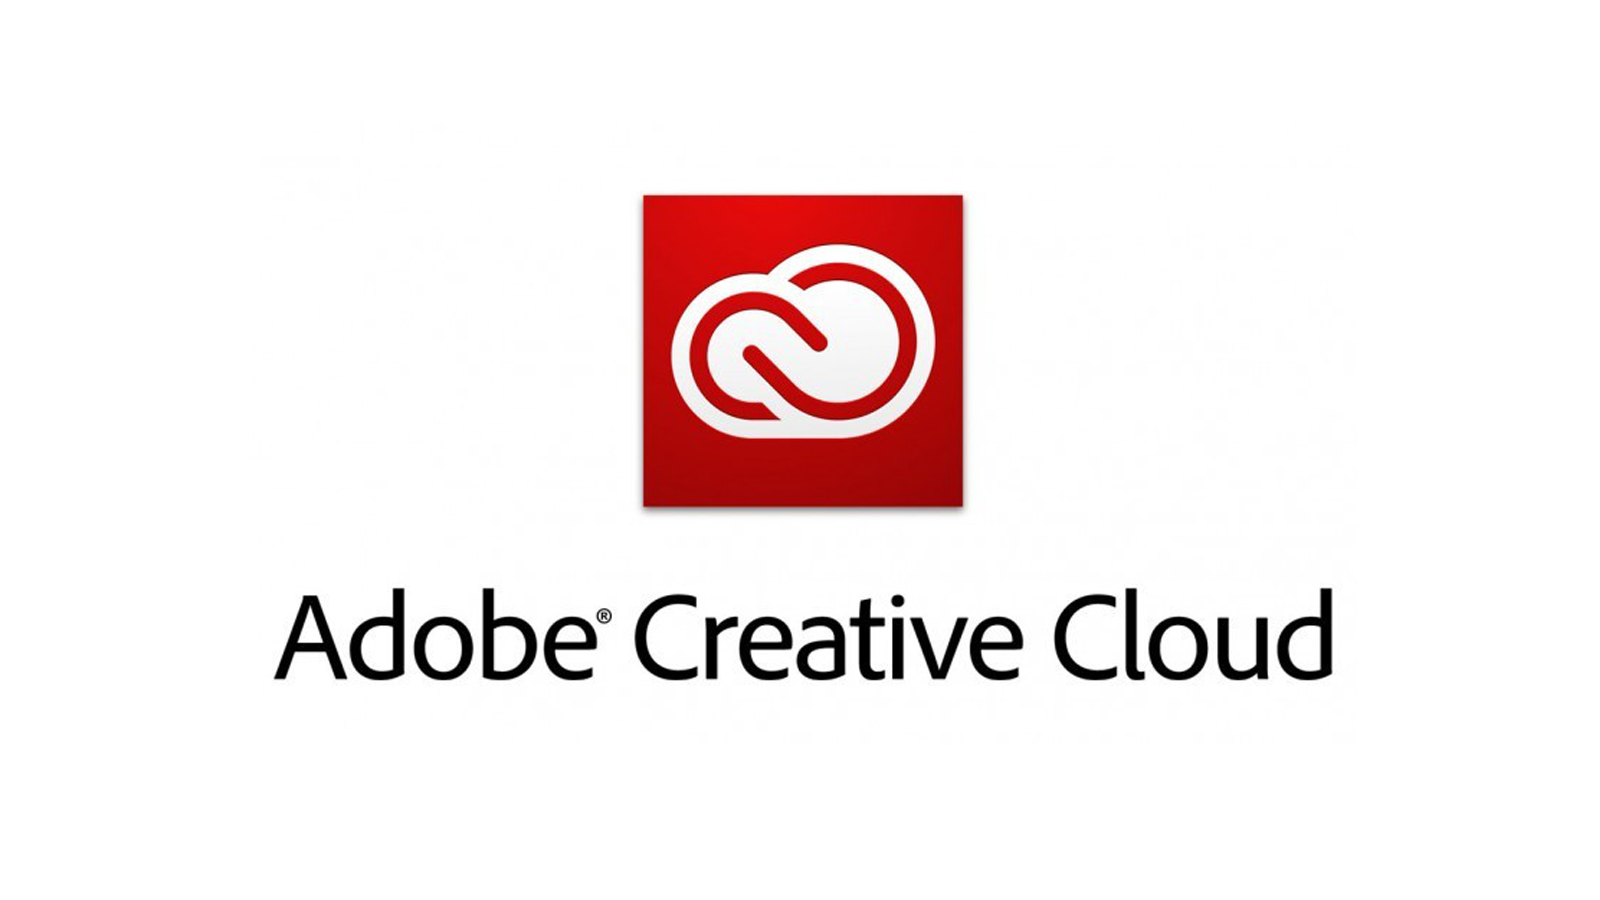 Creative adobe com. Adobe Creative cloud. Adobe cc. Adobe Creative cloud лого. Сервисы адобе.